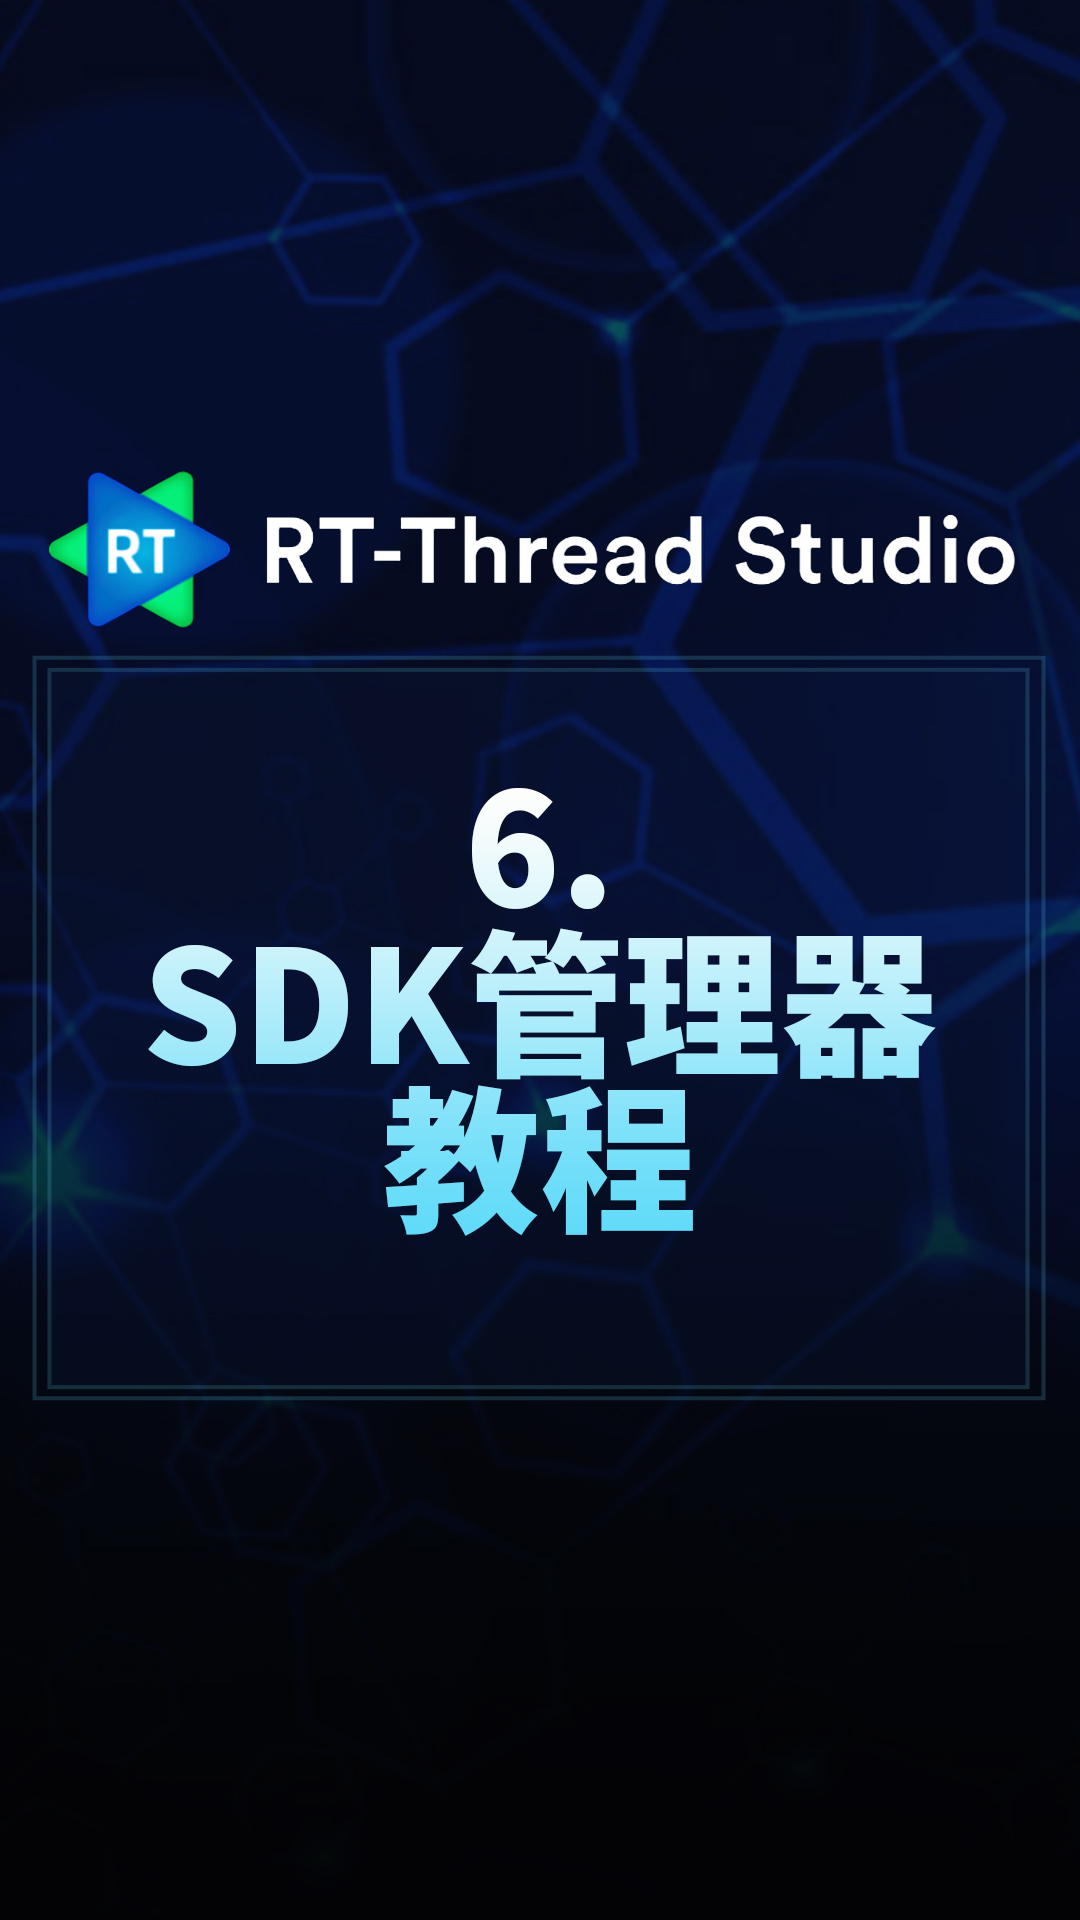 RT-Thread Studio - 6.SDK管理器教程   #RT-Thread 